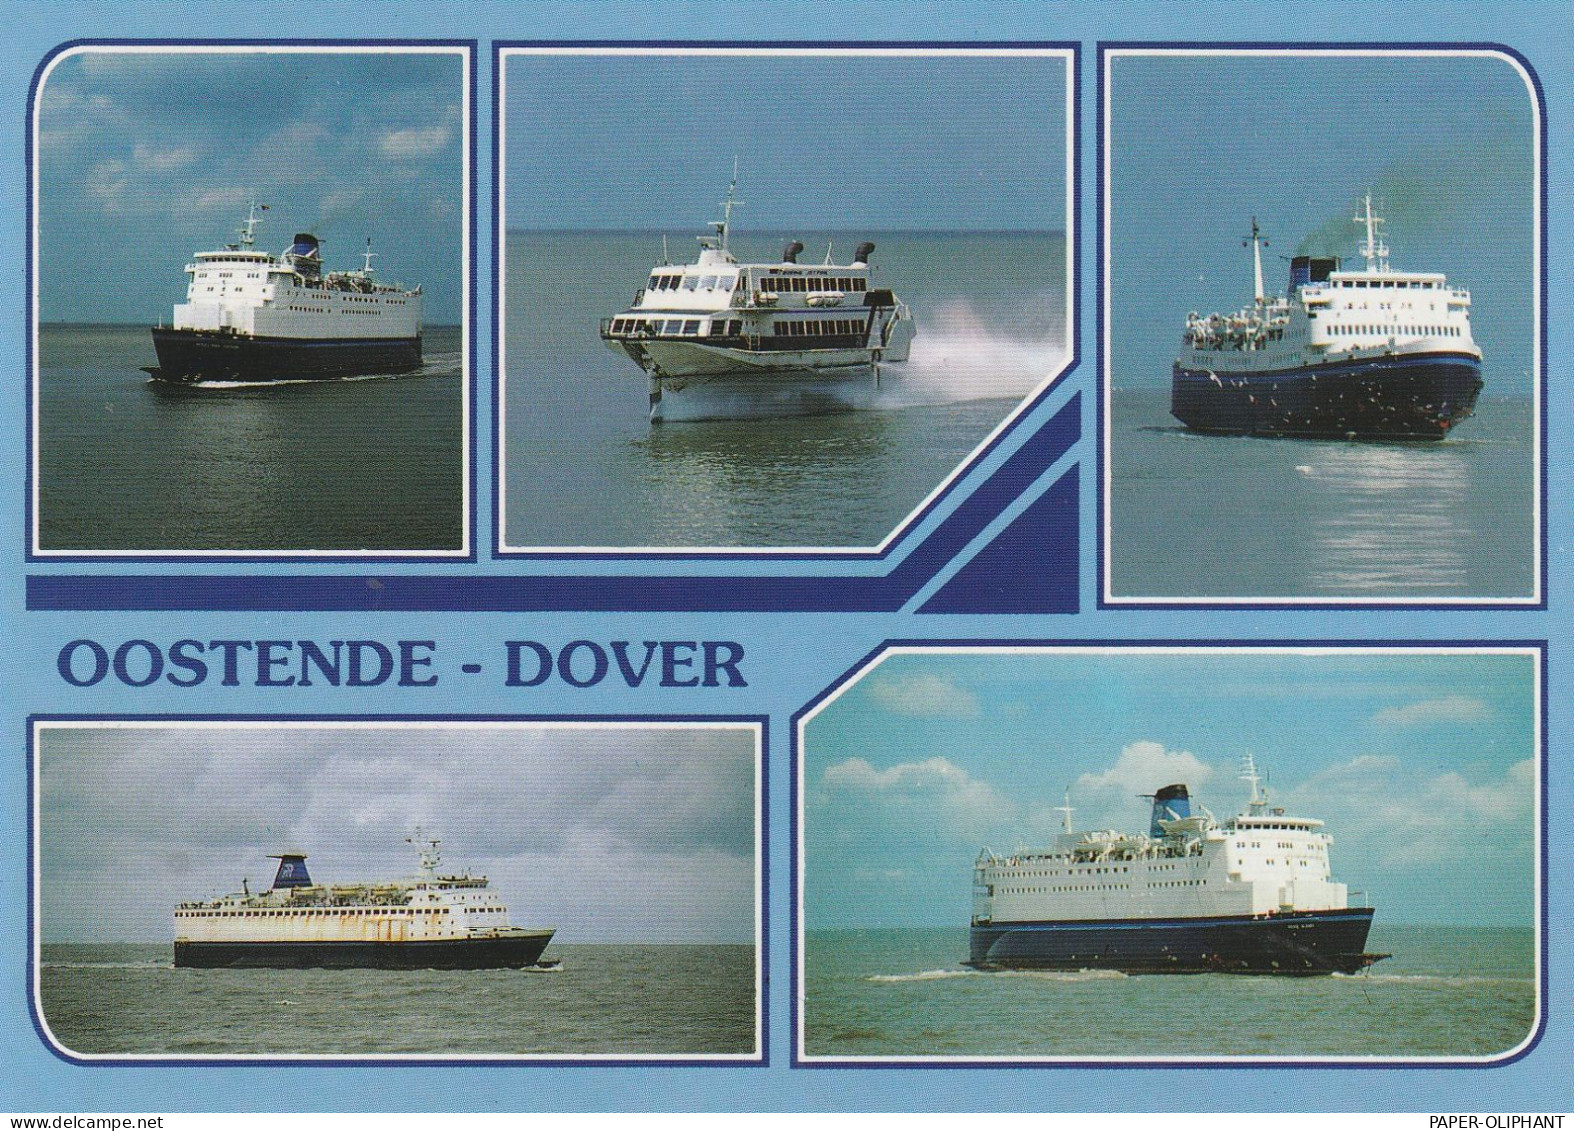 FÄHRE / Ferry / Traversier, 5 Ships, Oostende - Dover - Ferries